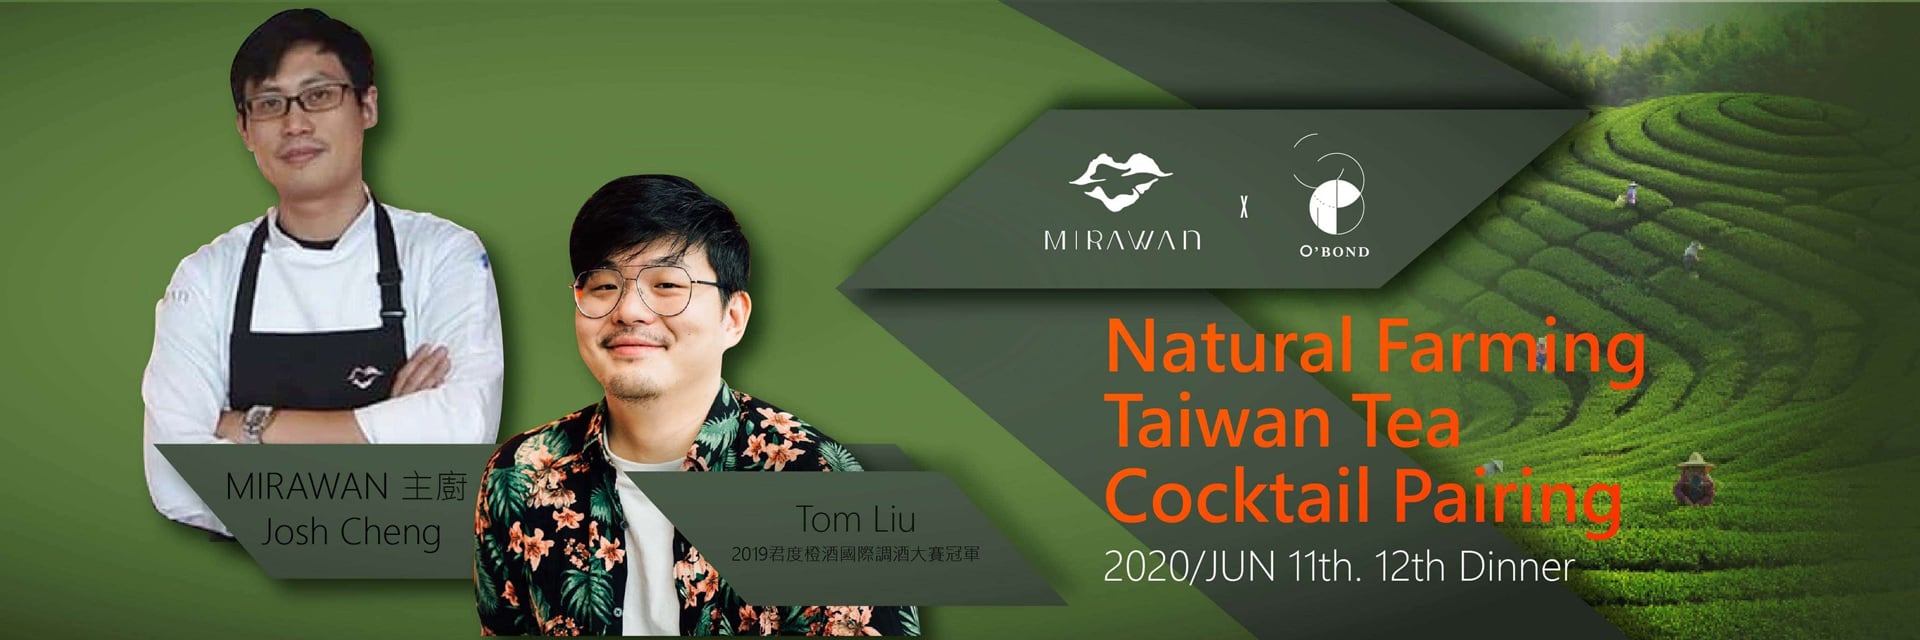 NATURAL FARMING TAIWAN TEA COCKTAIL PAIRING